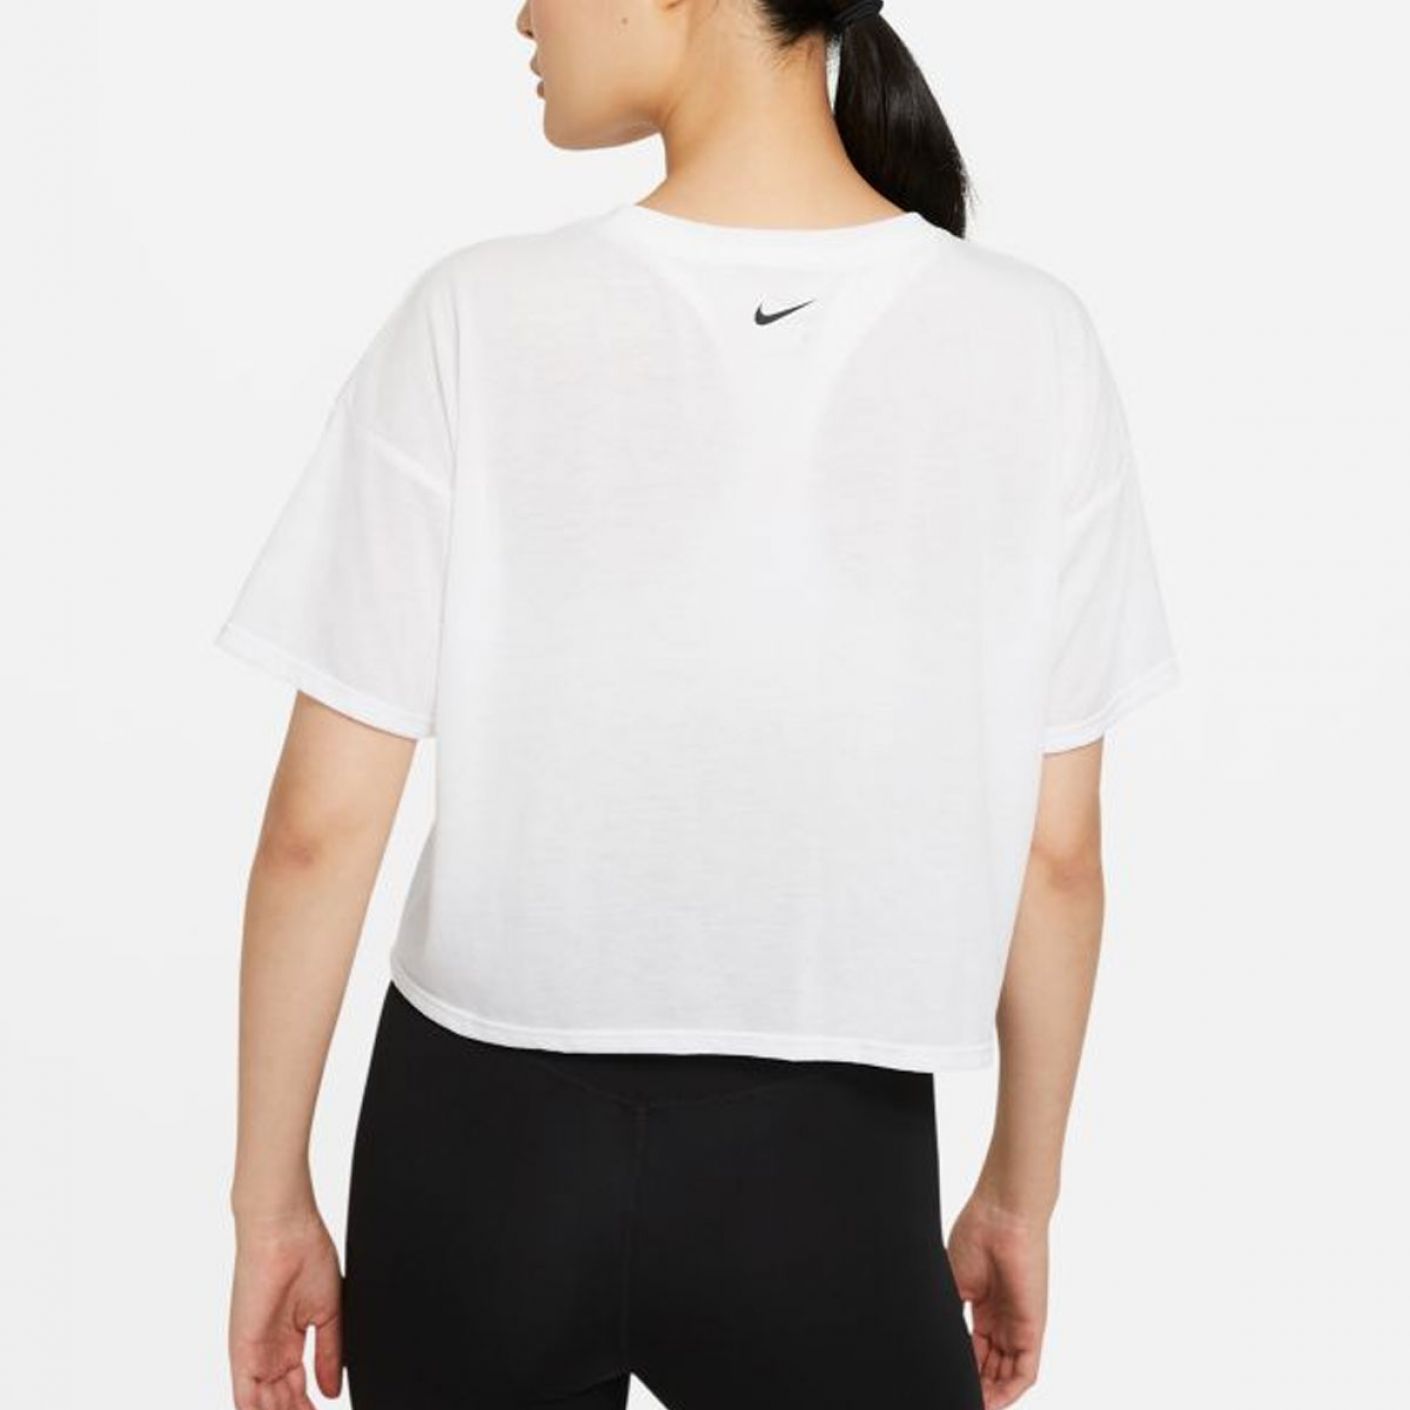 Nike Women's Dri-Fit White T-shirt